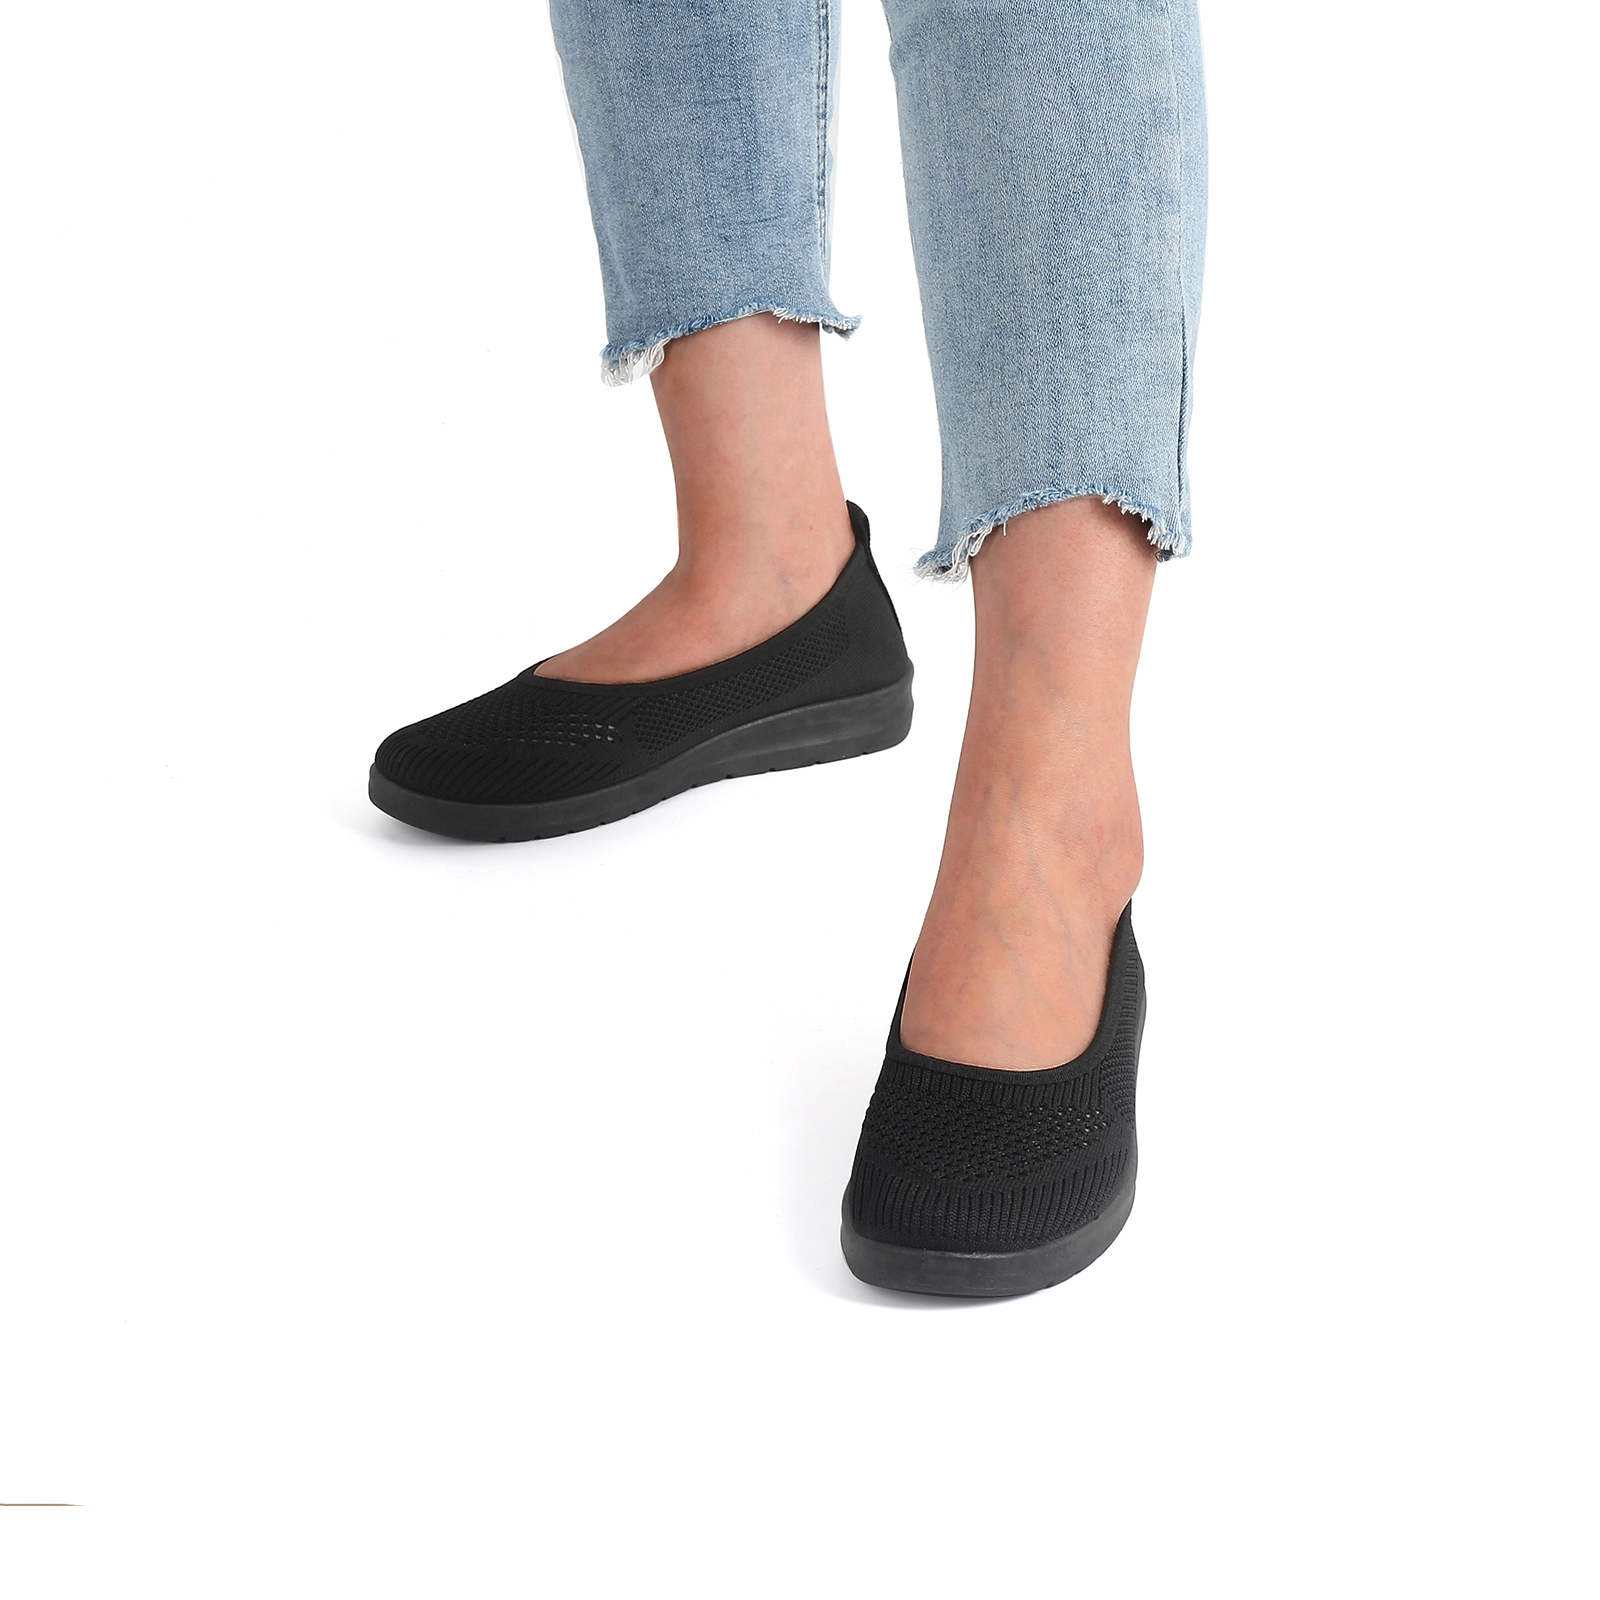 MUSSHOE Women's Slip-on shoe Comfortable Flat Shoes